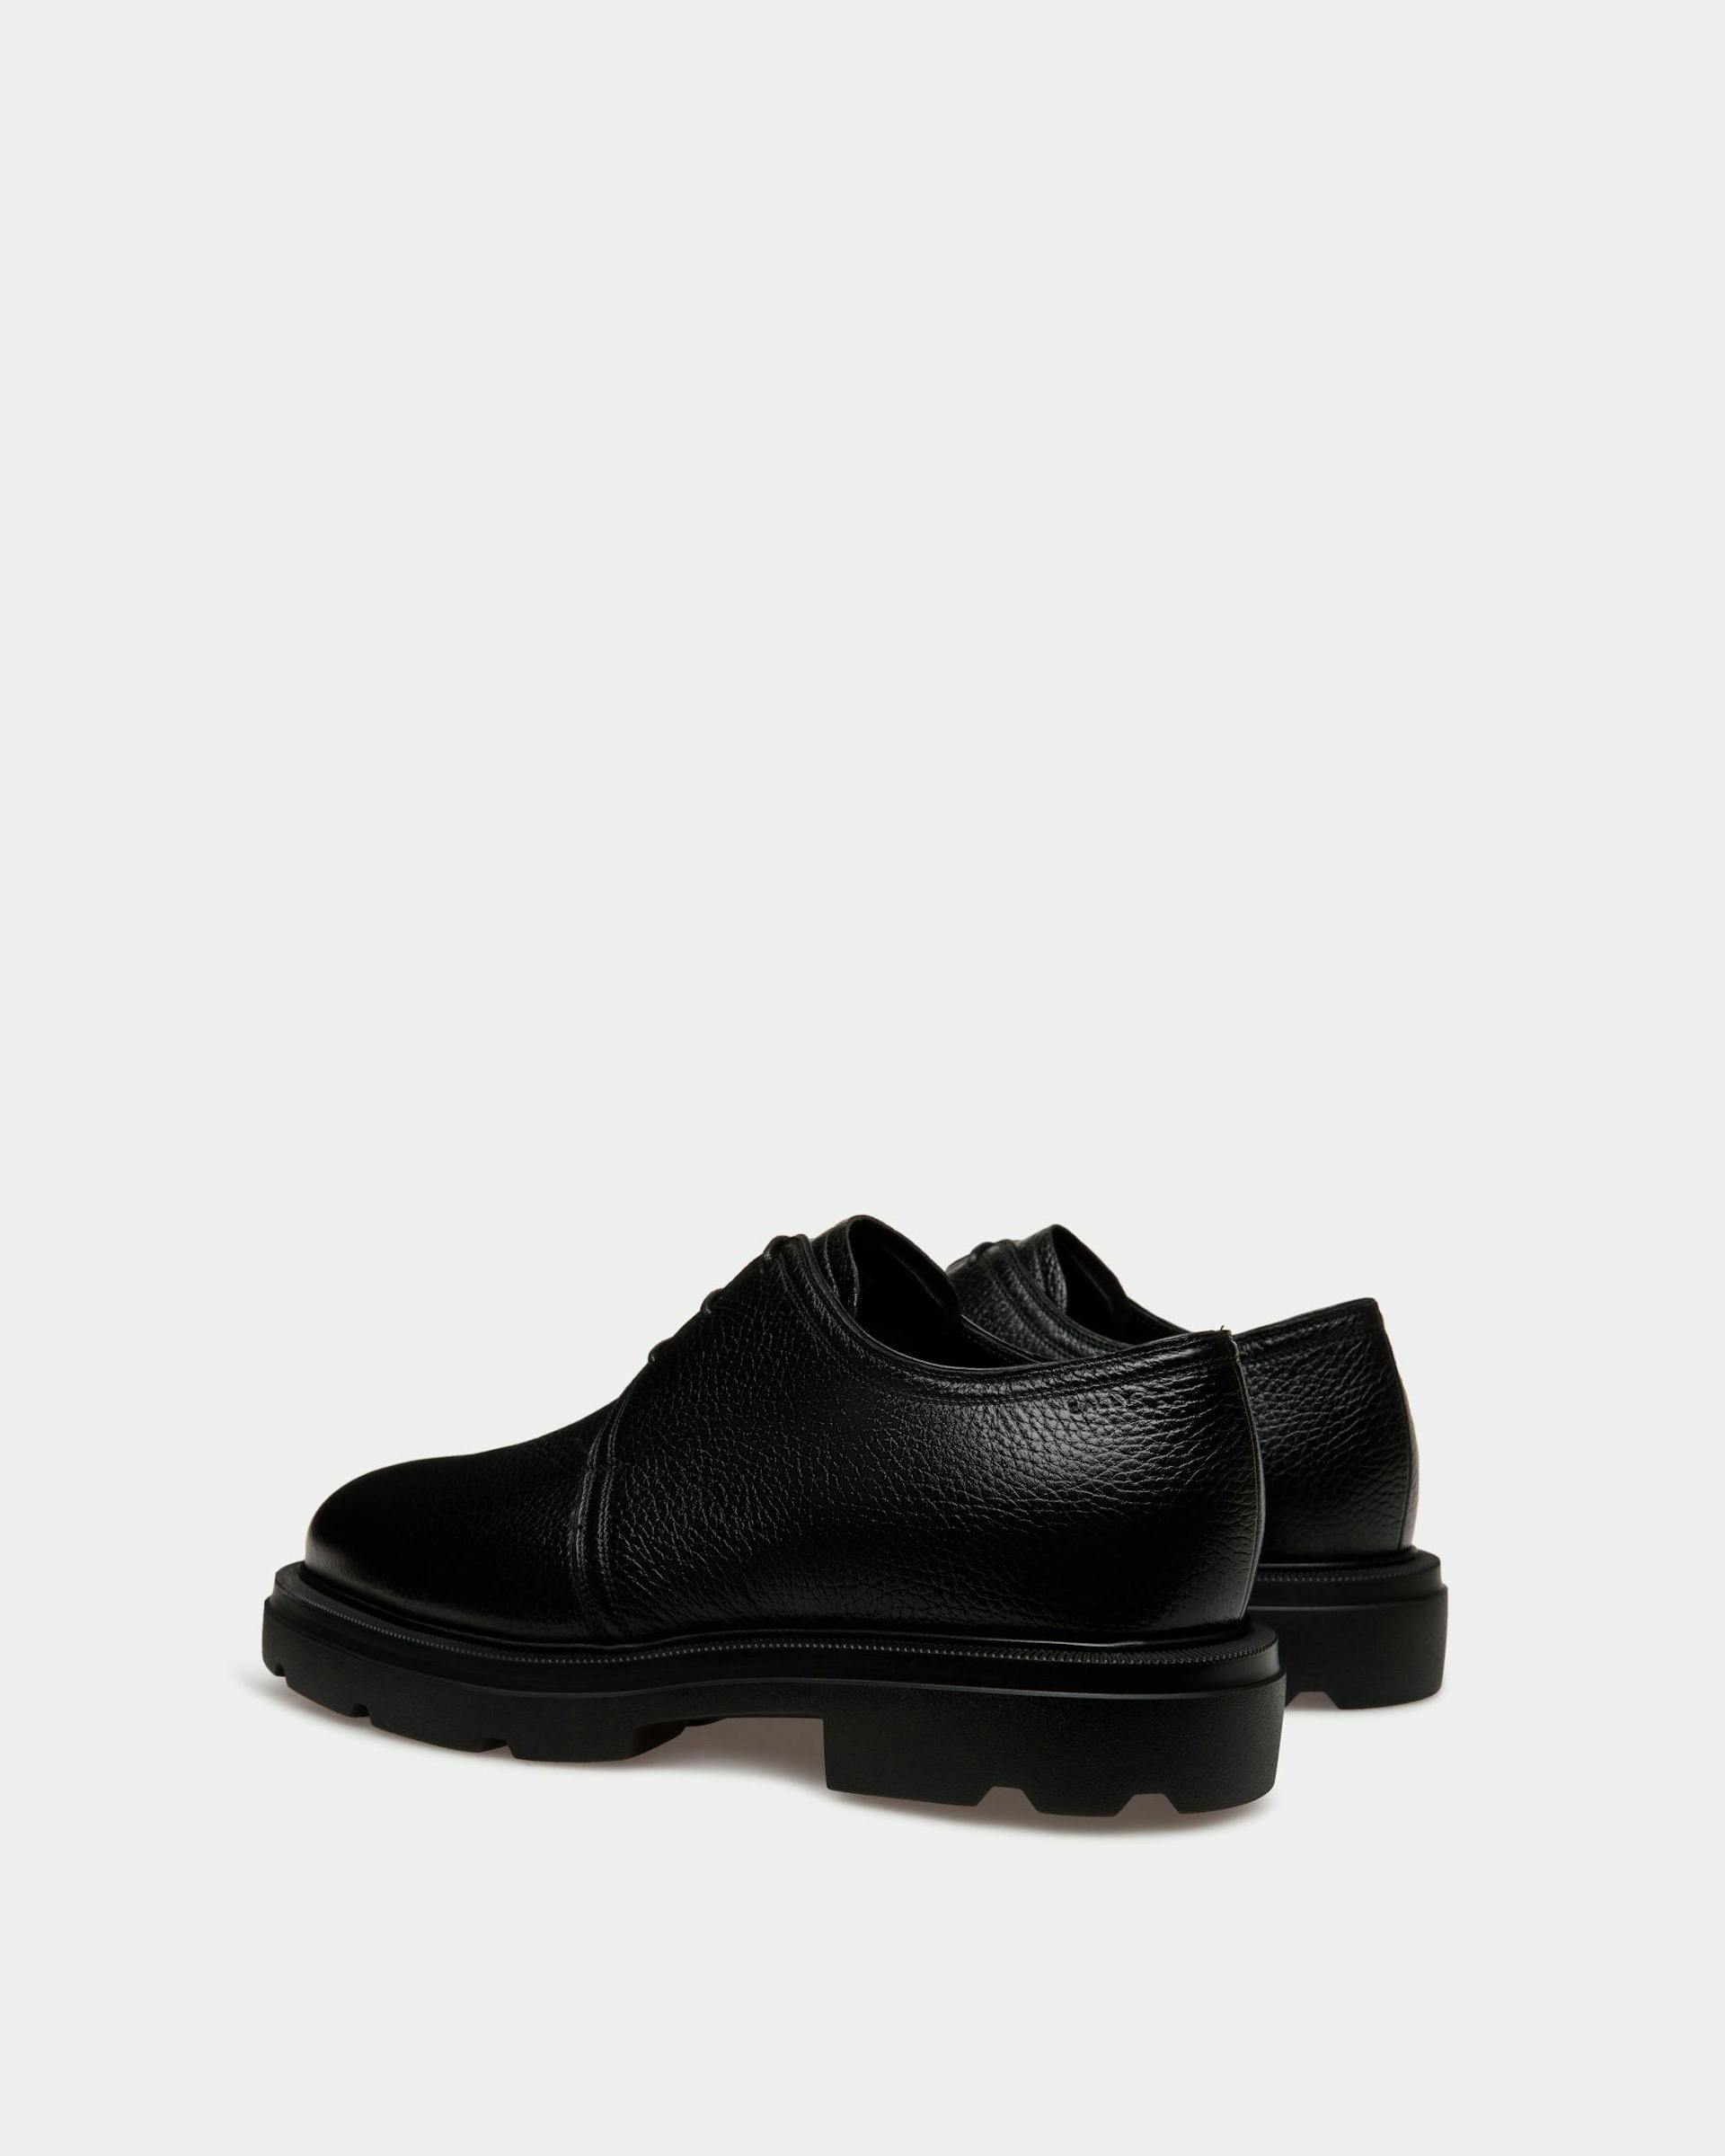 Zurich Derby Shoes In Black Leather - Men's - Bally - 03